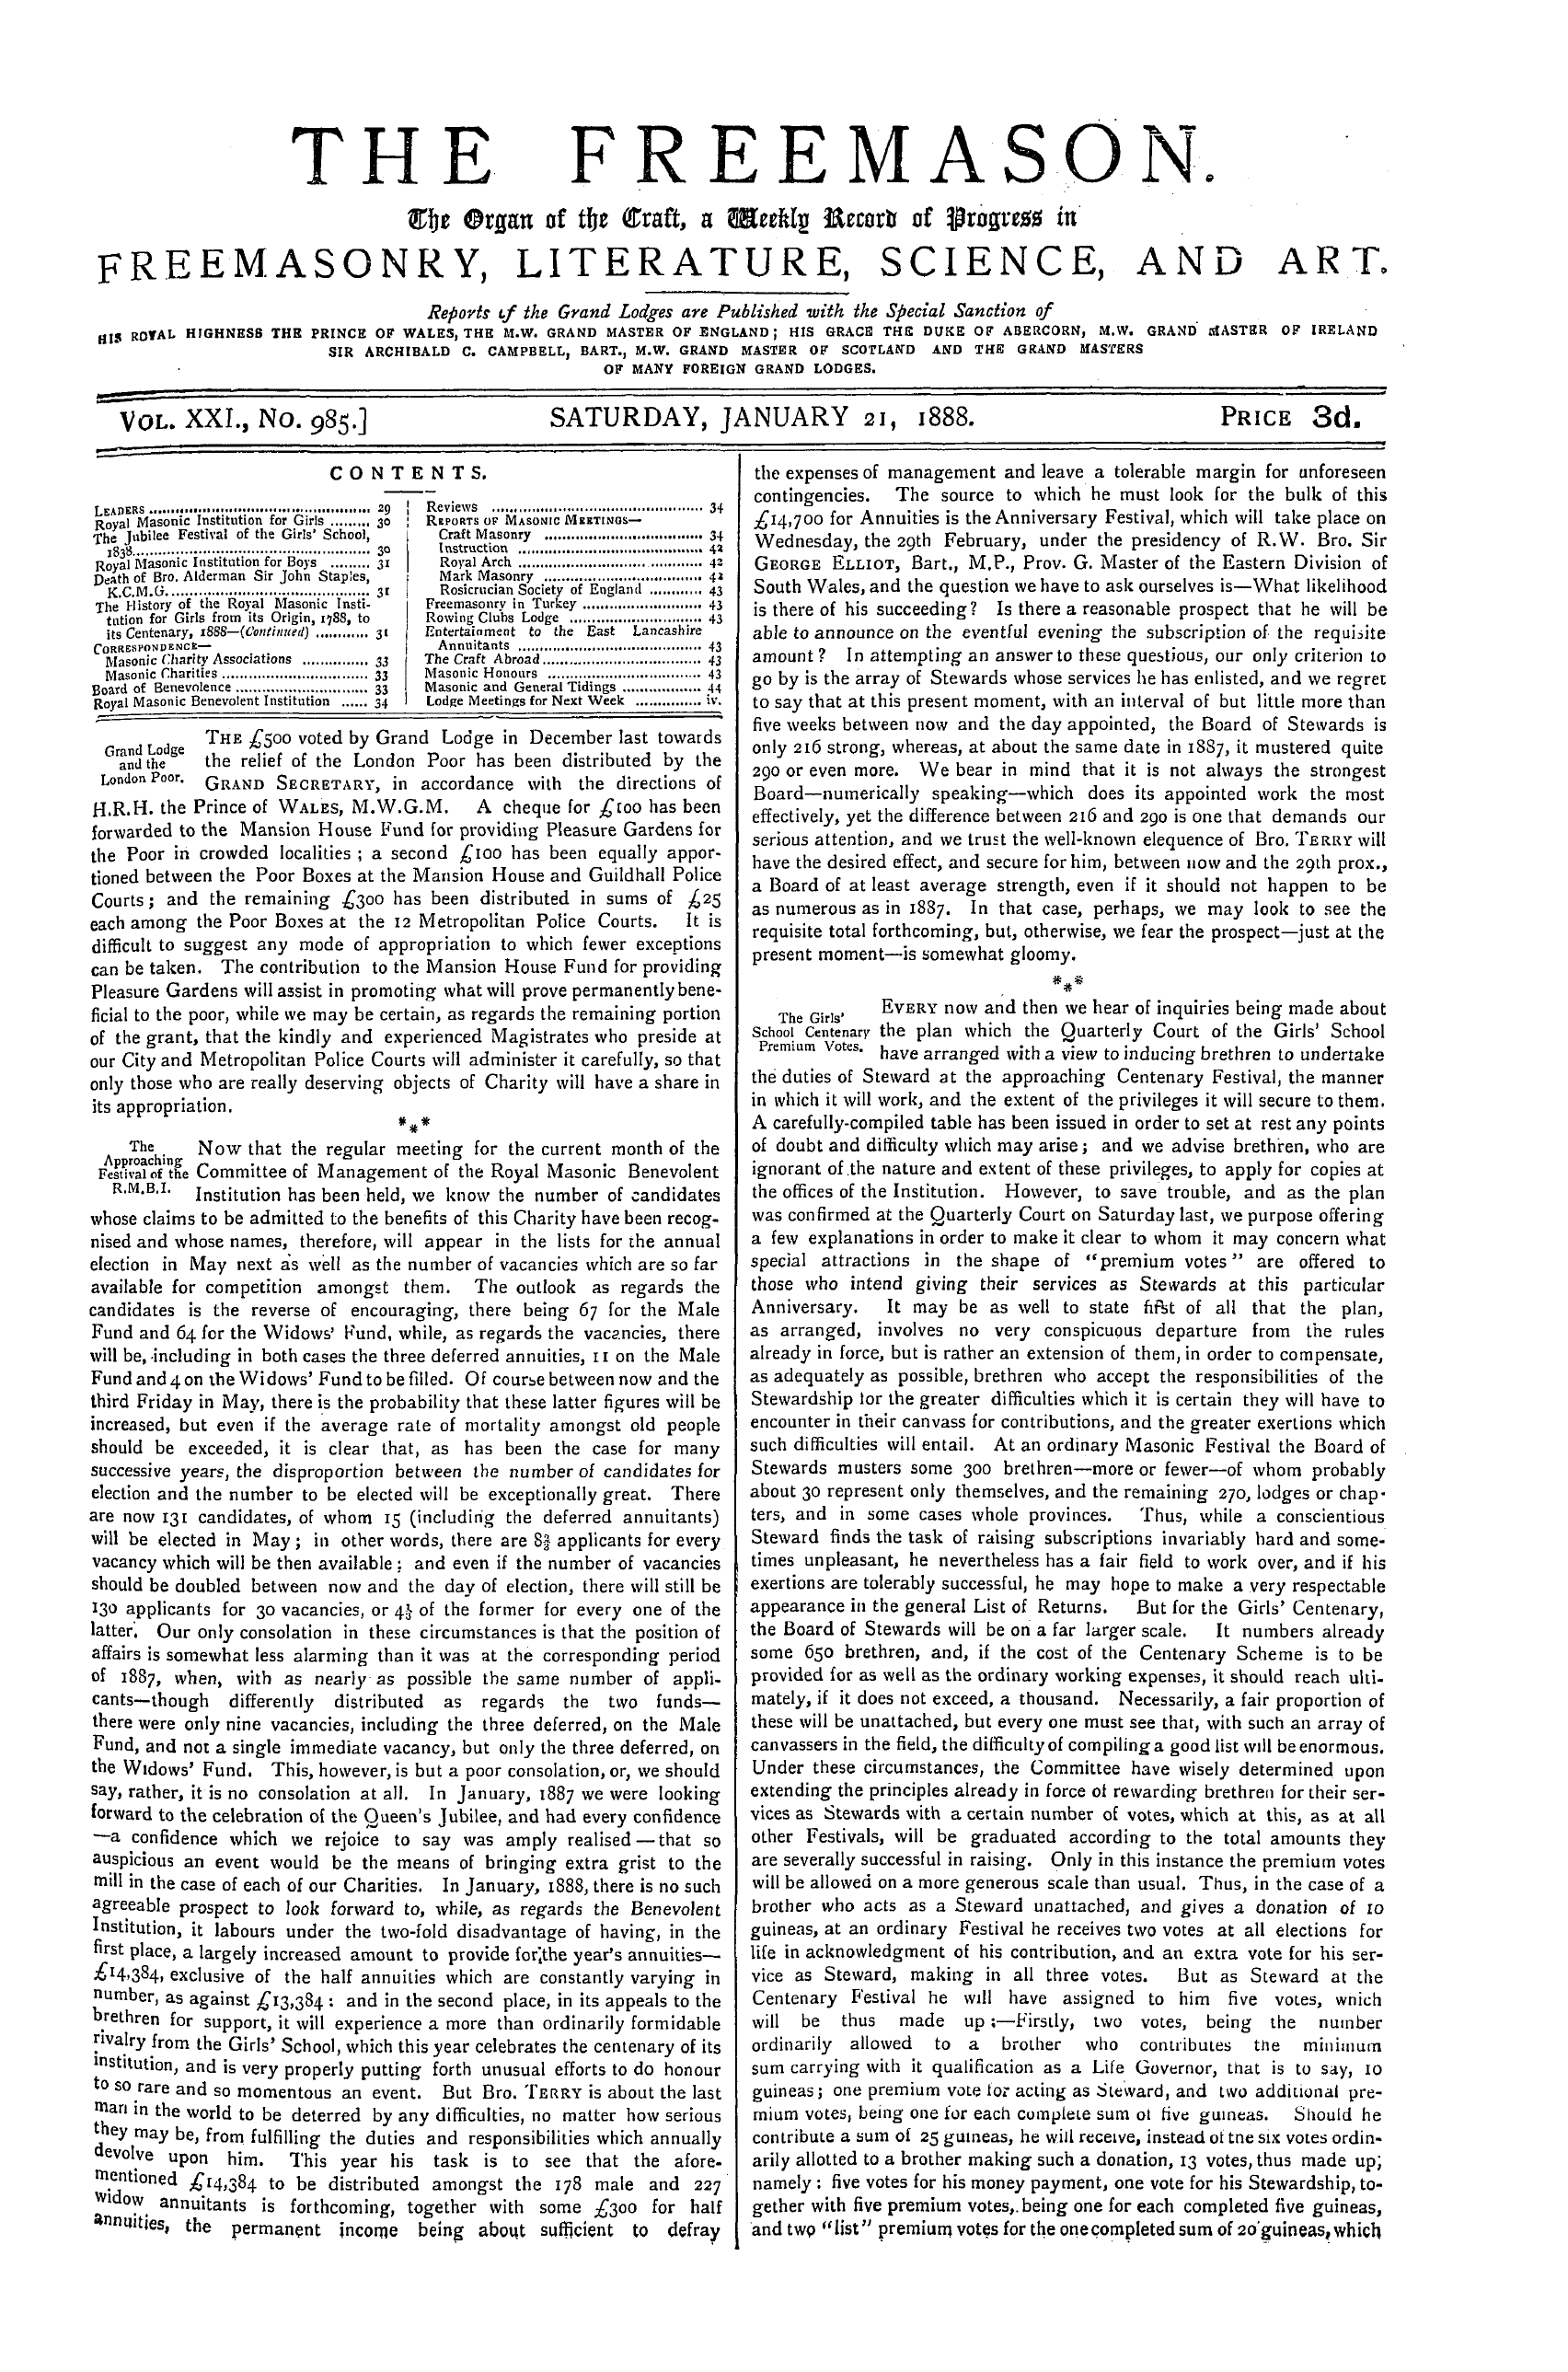 The Freemason: 1888-01-21 - Contents.